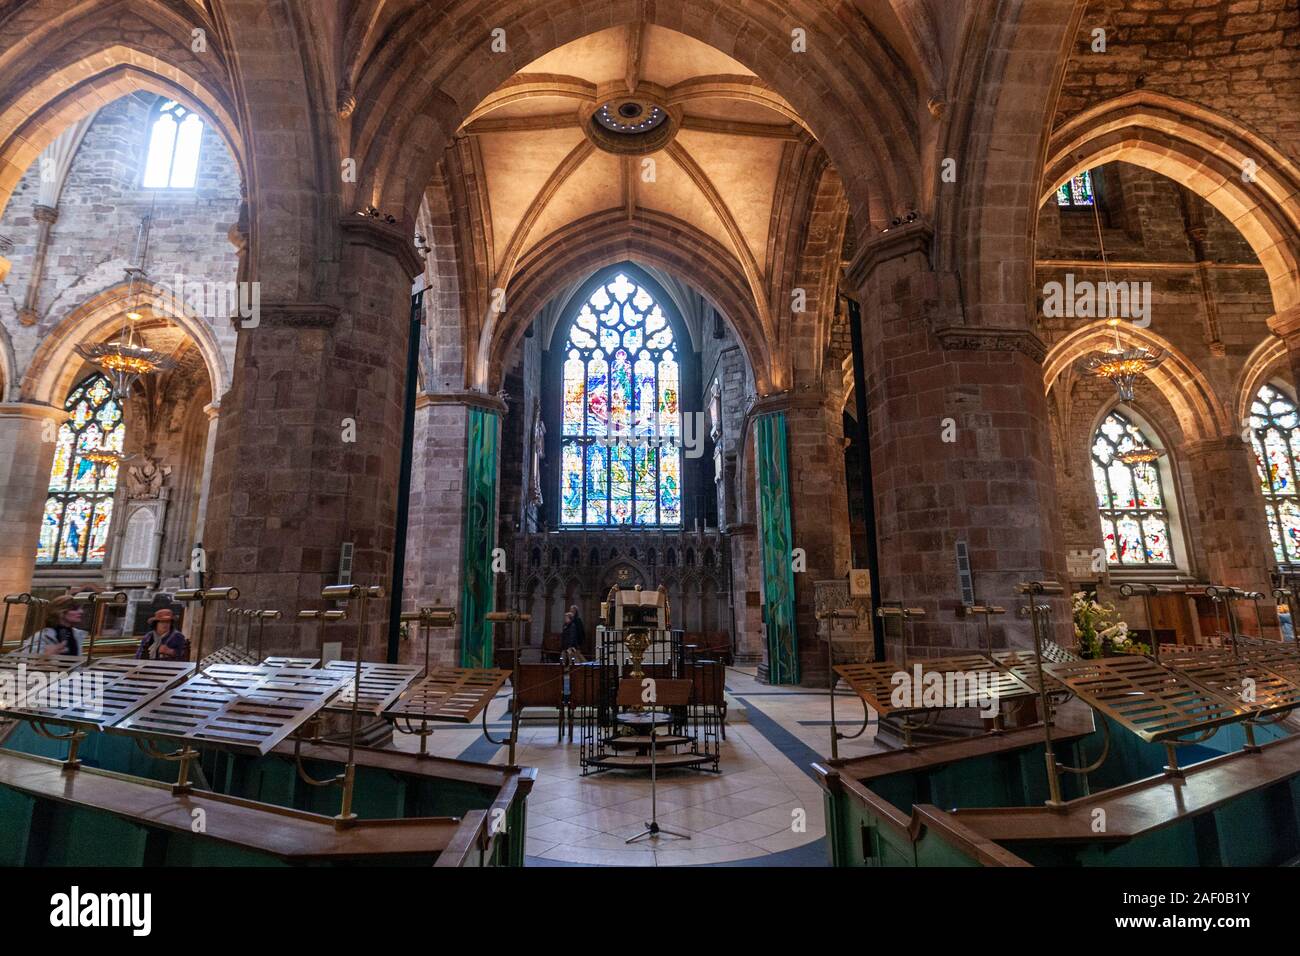 Interior of St Giles' Cathedral, Edinburgh, Scotland, UK Stock Photo